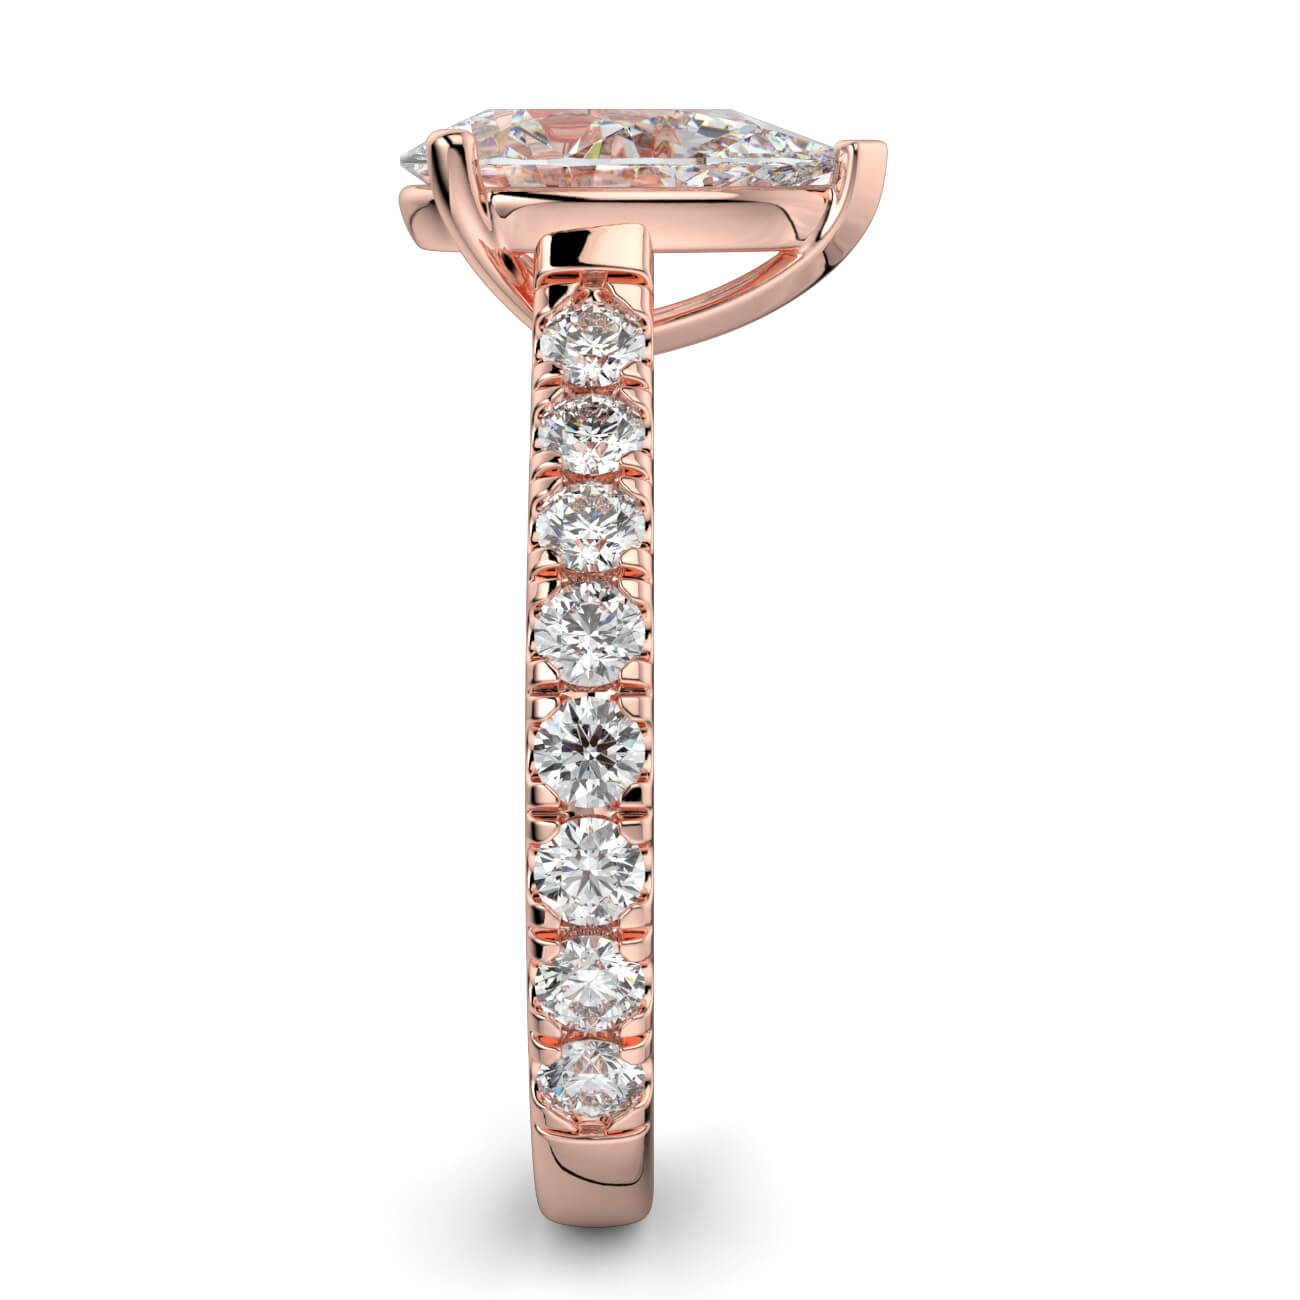 Prestige Pear Cut Diamond Engagement Ring In Rose Gold – Australian Diamond Network